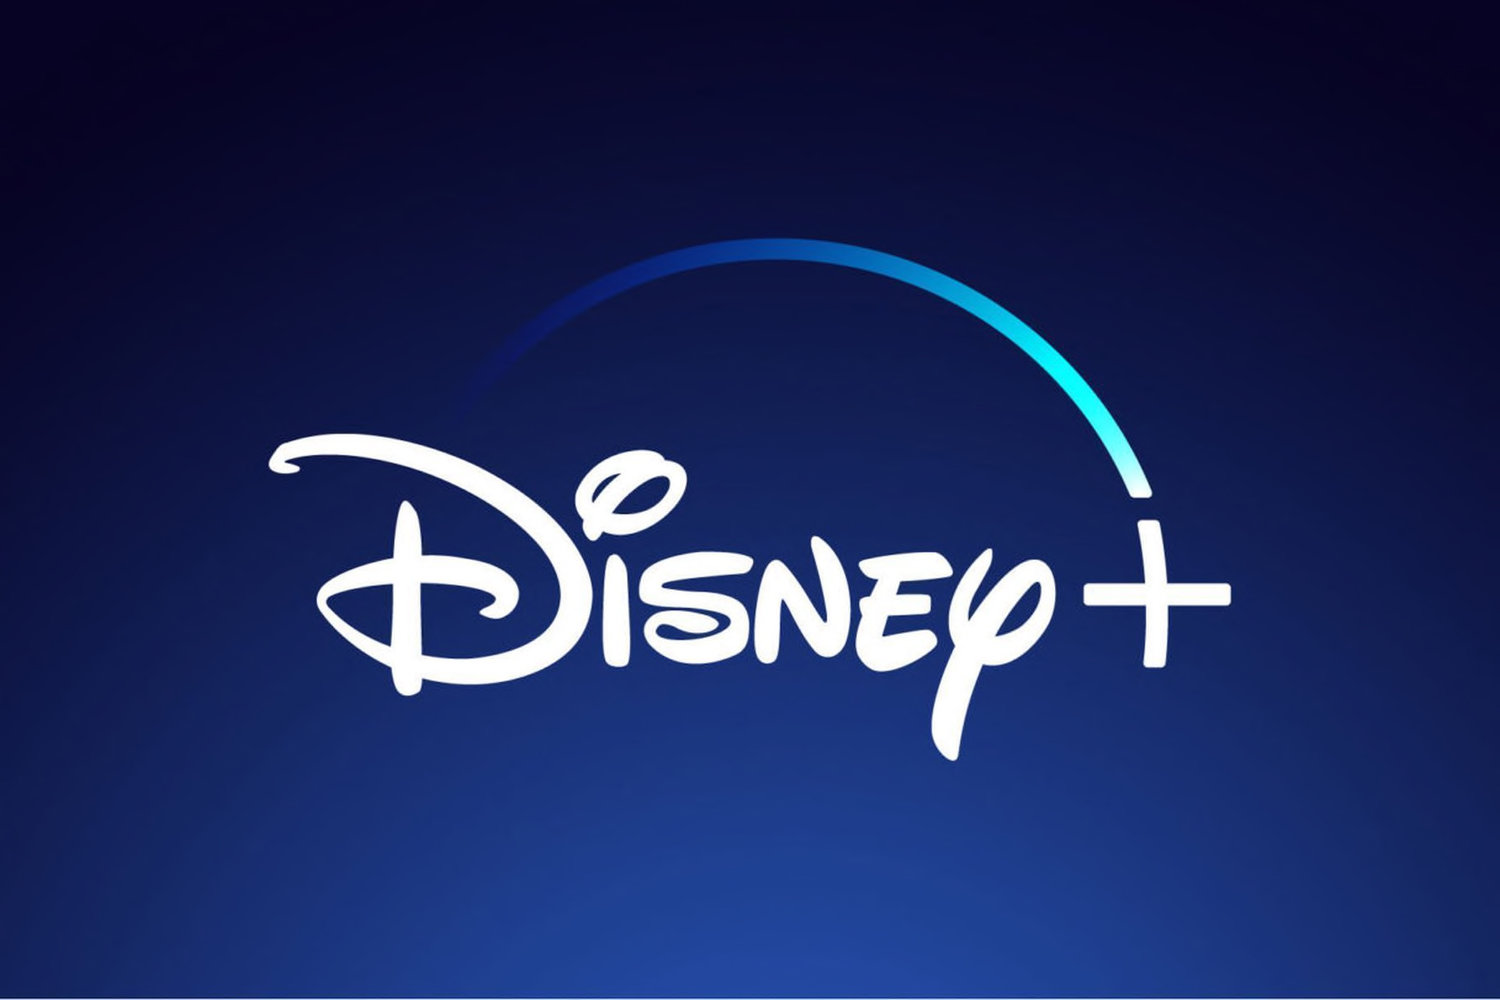 Disney + Logo